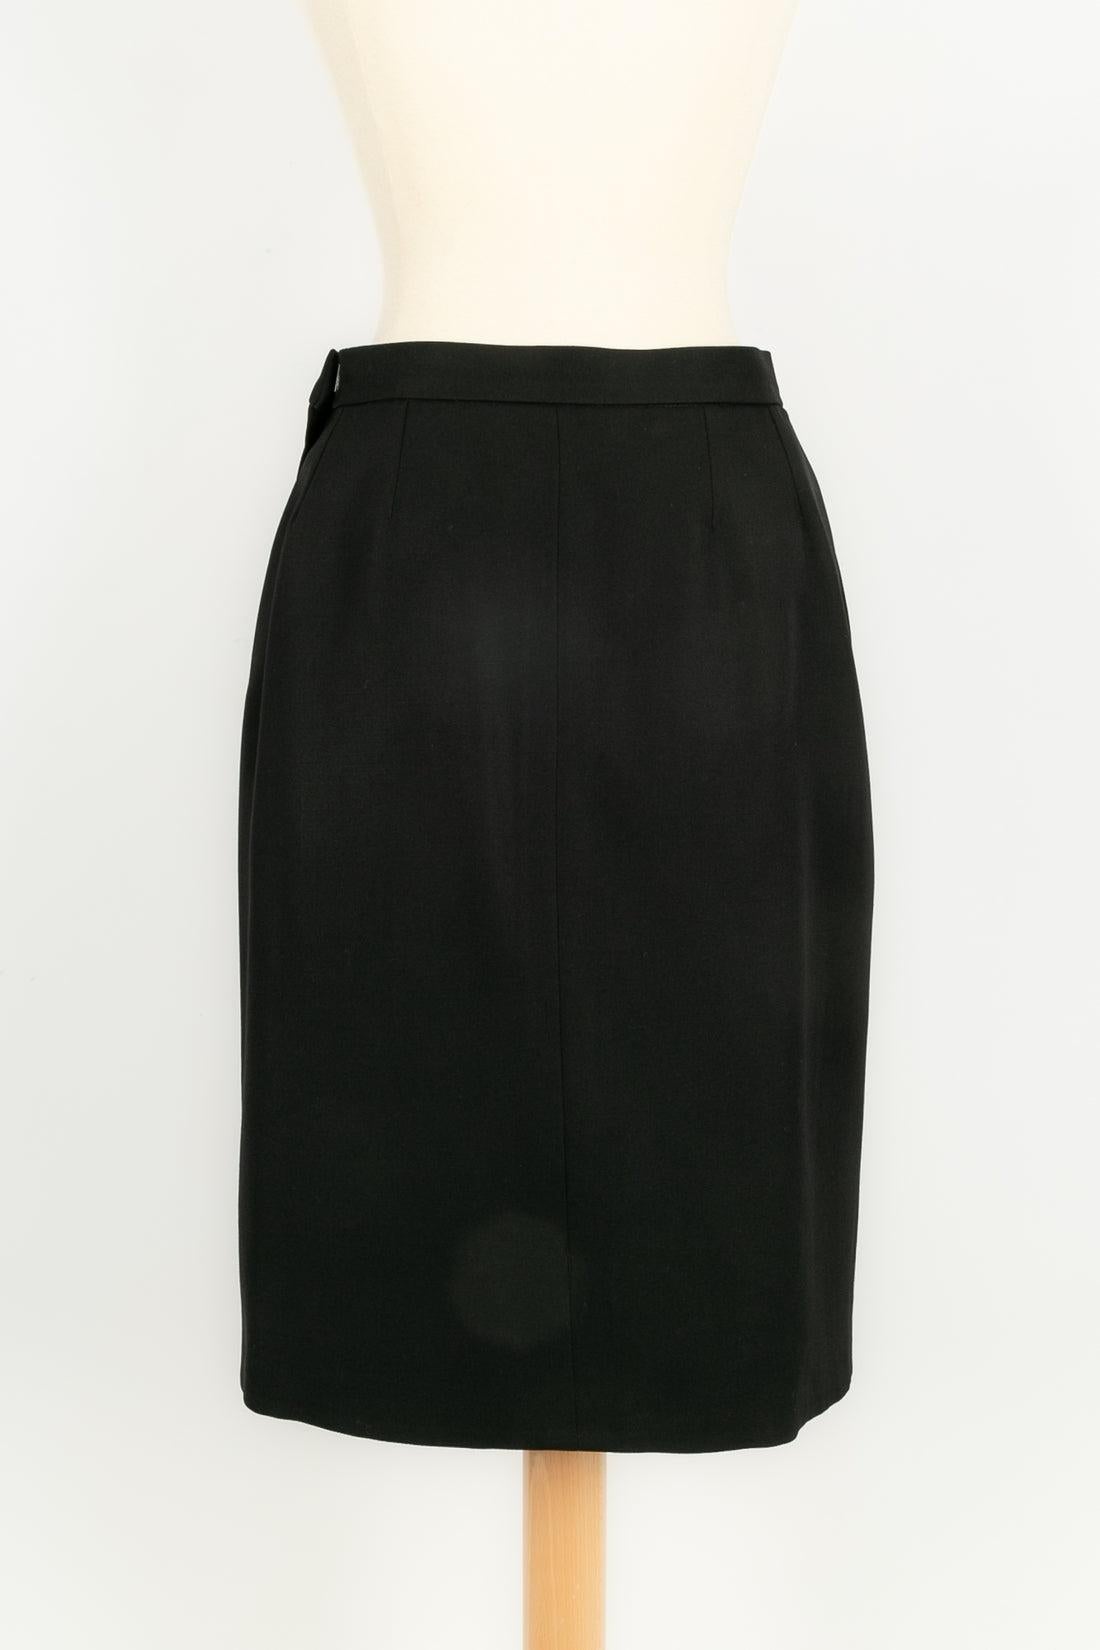 Yves Saint Laurent Black Skirt Suit For Sale 3